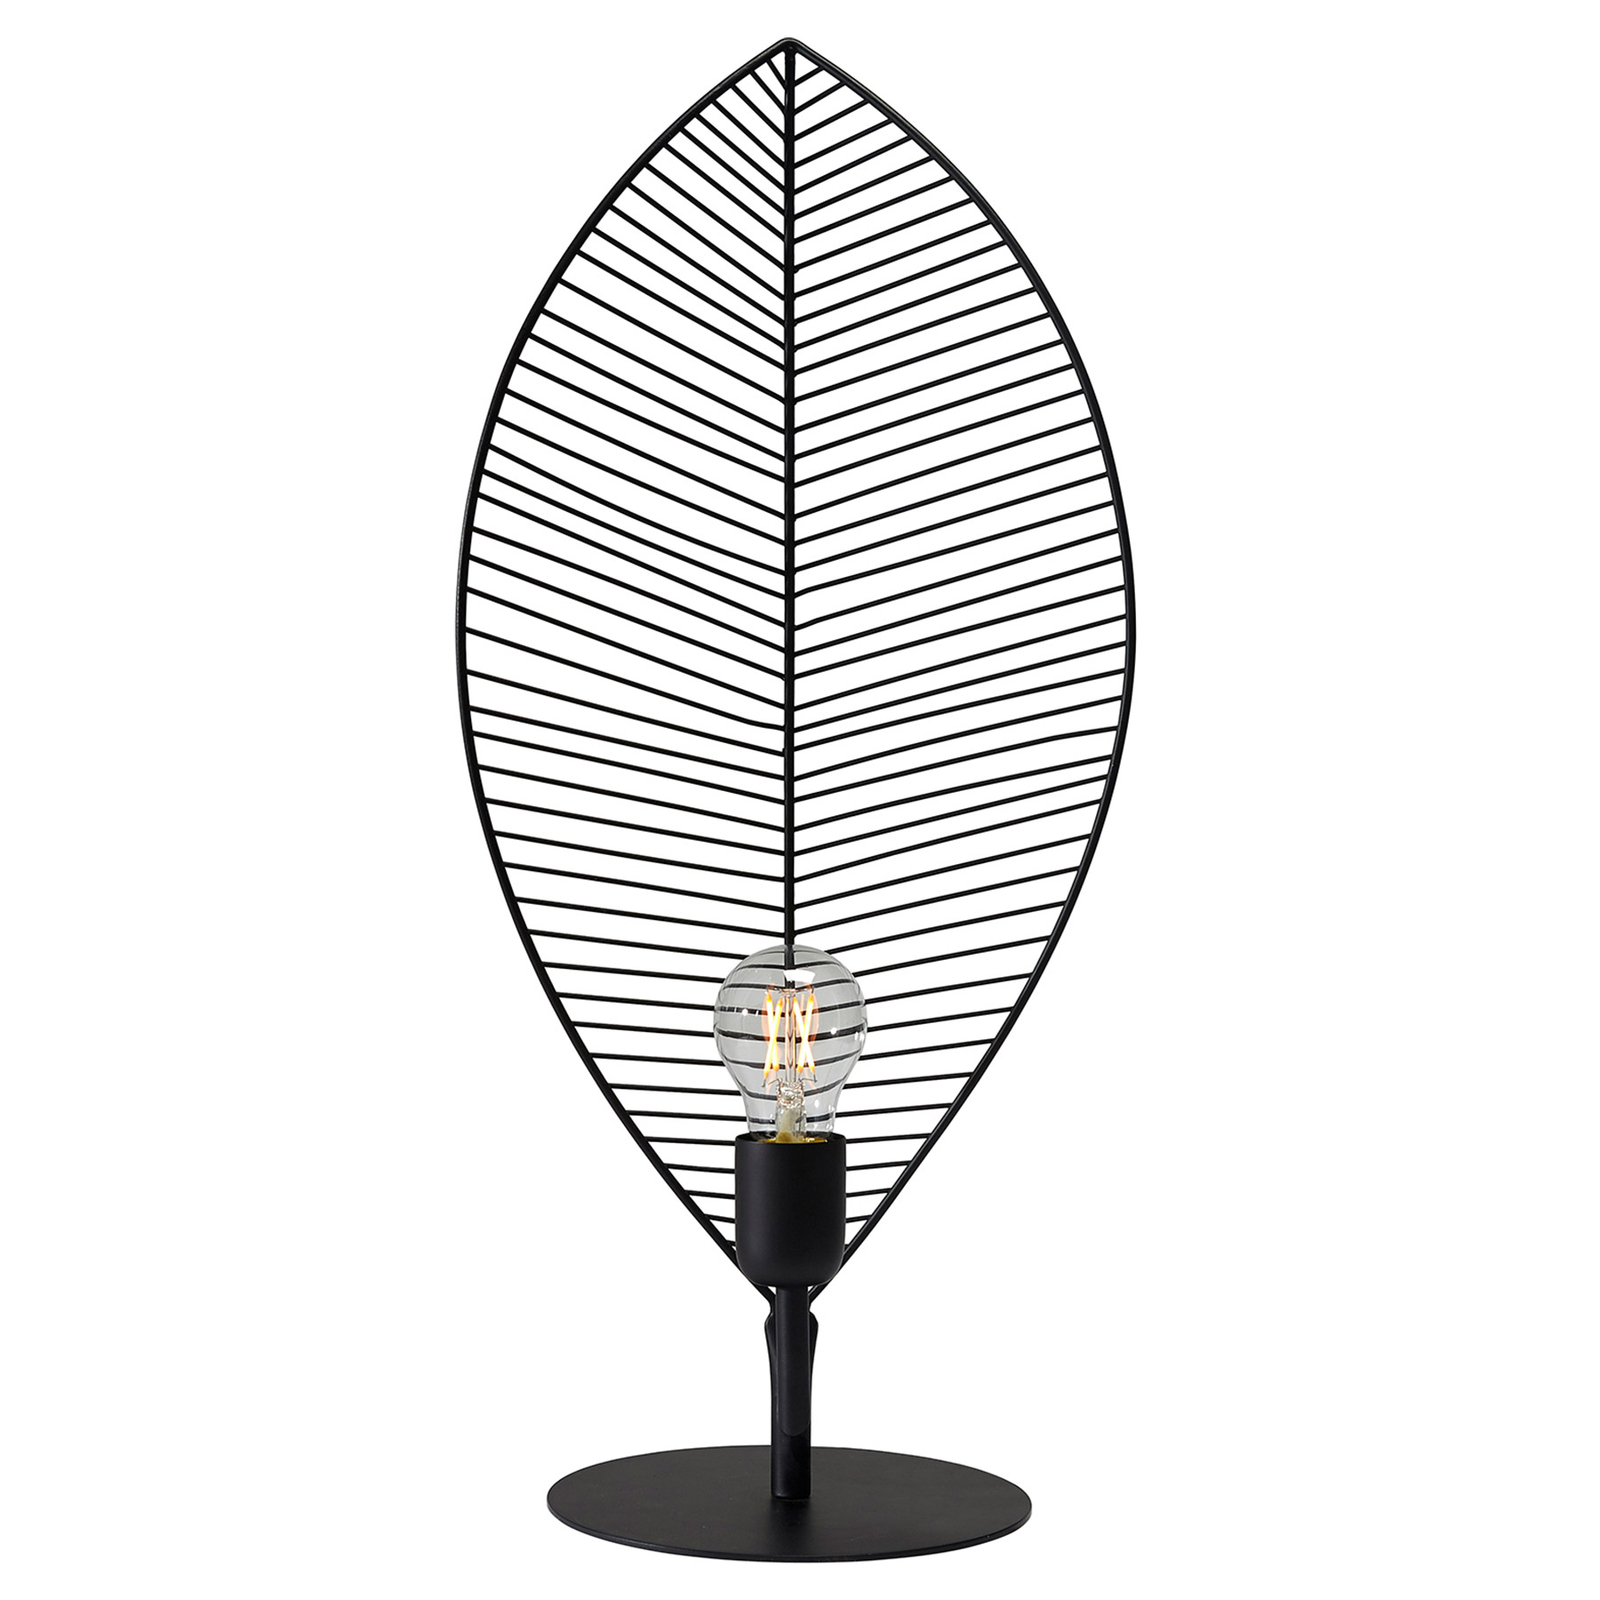 PR Home Elm bordslampa i bladform, höjd 58 cm